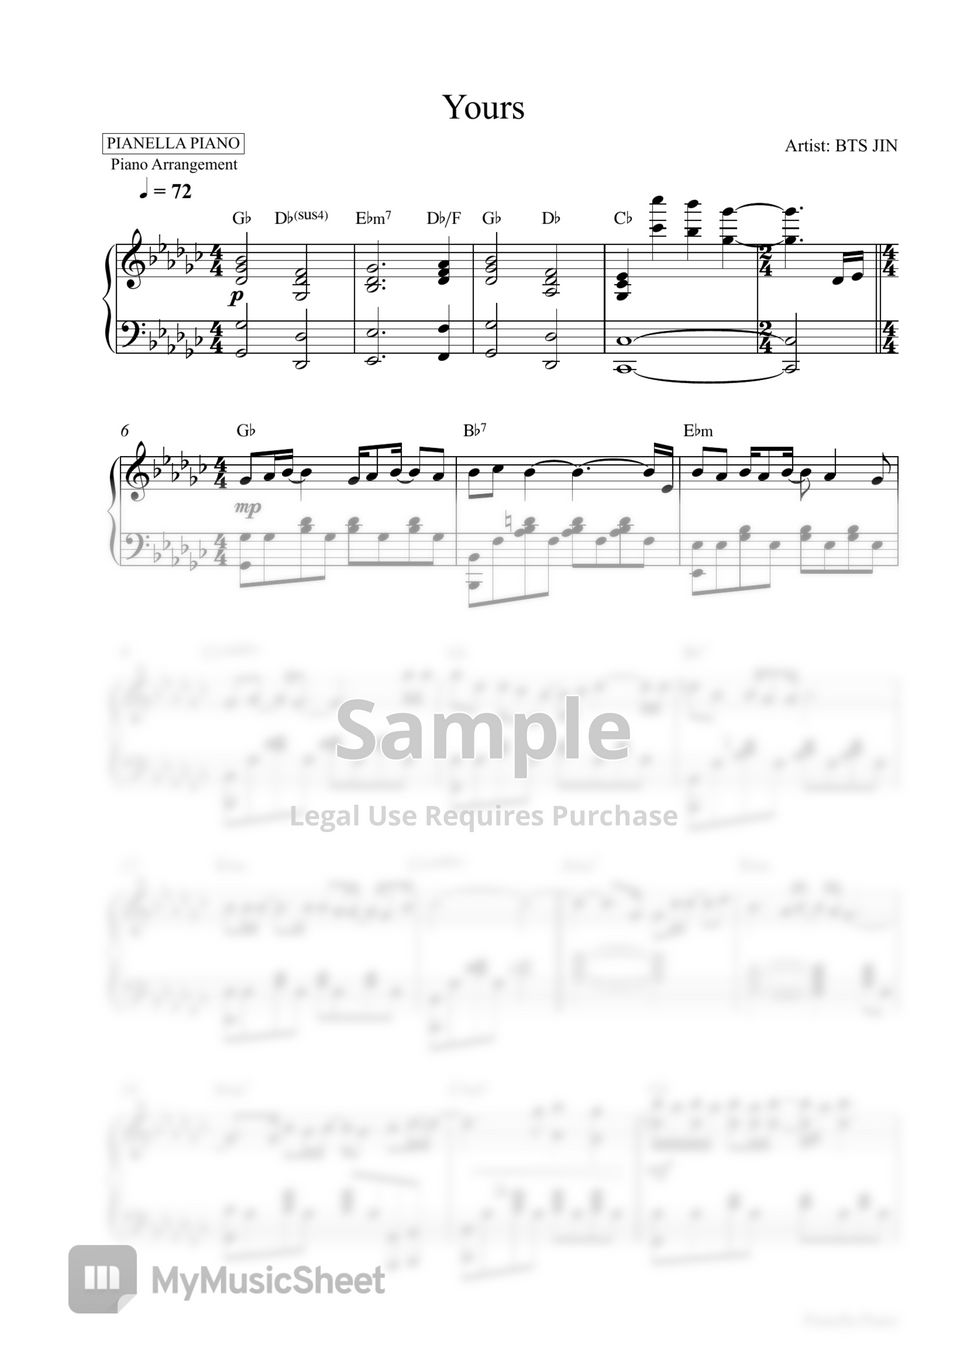 BTS JIN - Yours (2 PDF: Original Key in Gb & Easier Key in F) by Pianella Piano